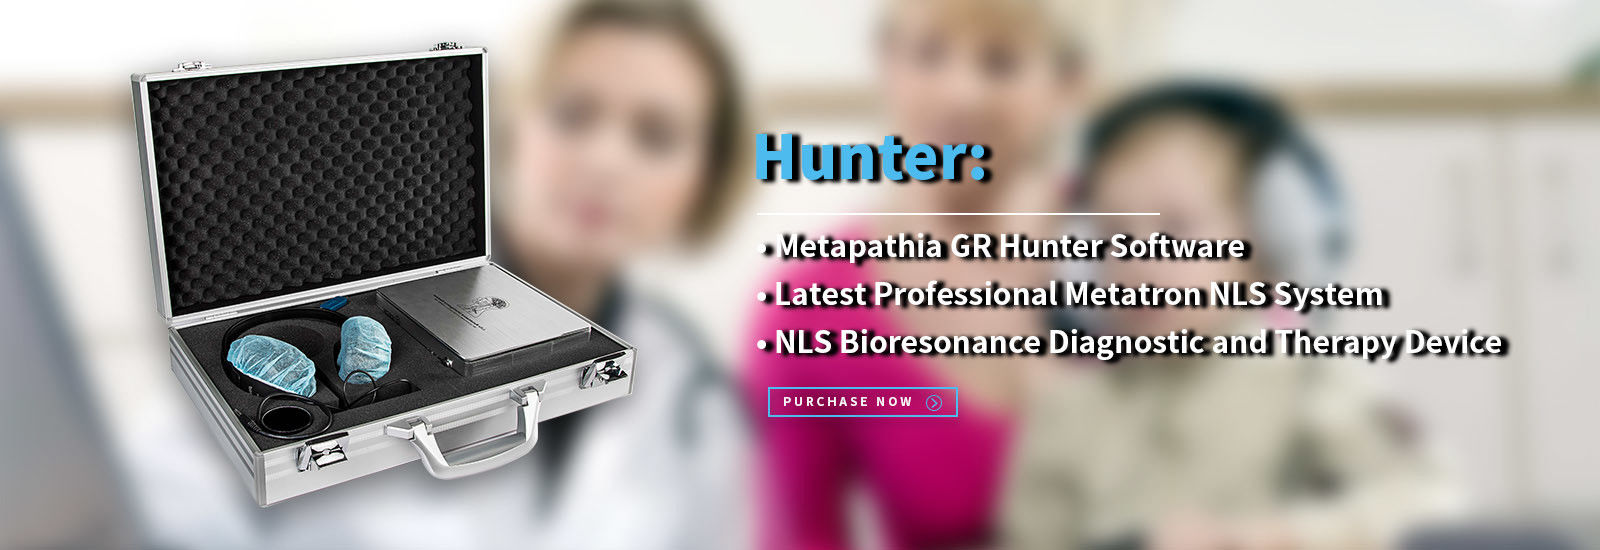 Ücretsiz Gönderim Clinic Bioresonance Metapathia GR Hunter 4025 Metatron Diagnostics Biofeedback Sağlık Analiz Cihazı